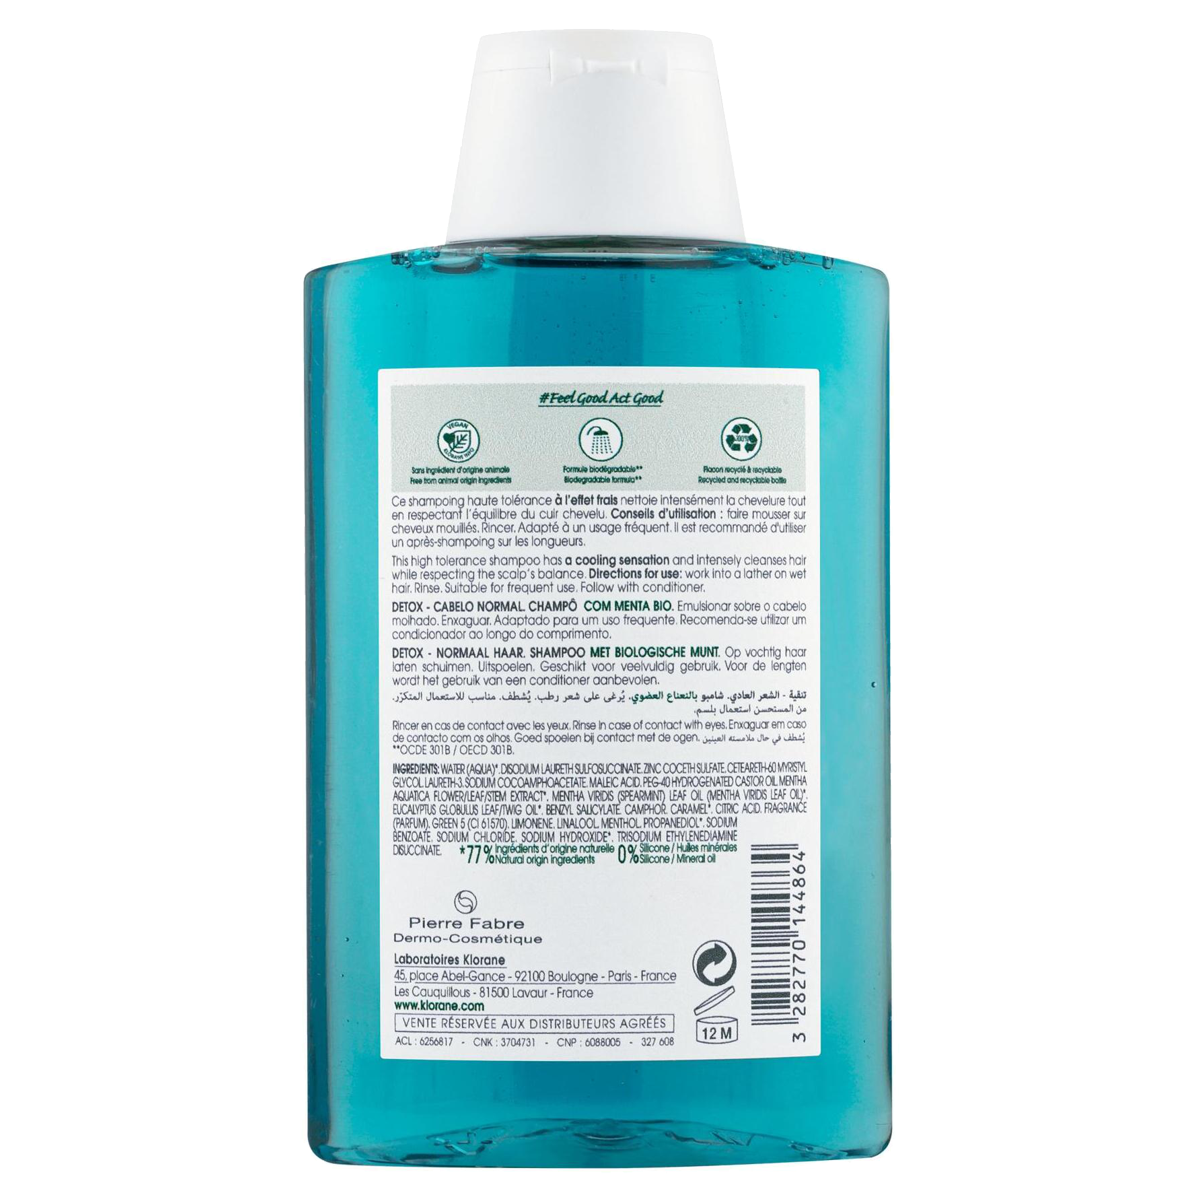 Klorane Wasserminze Bio Shampoo 200 ml